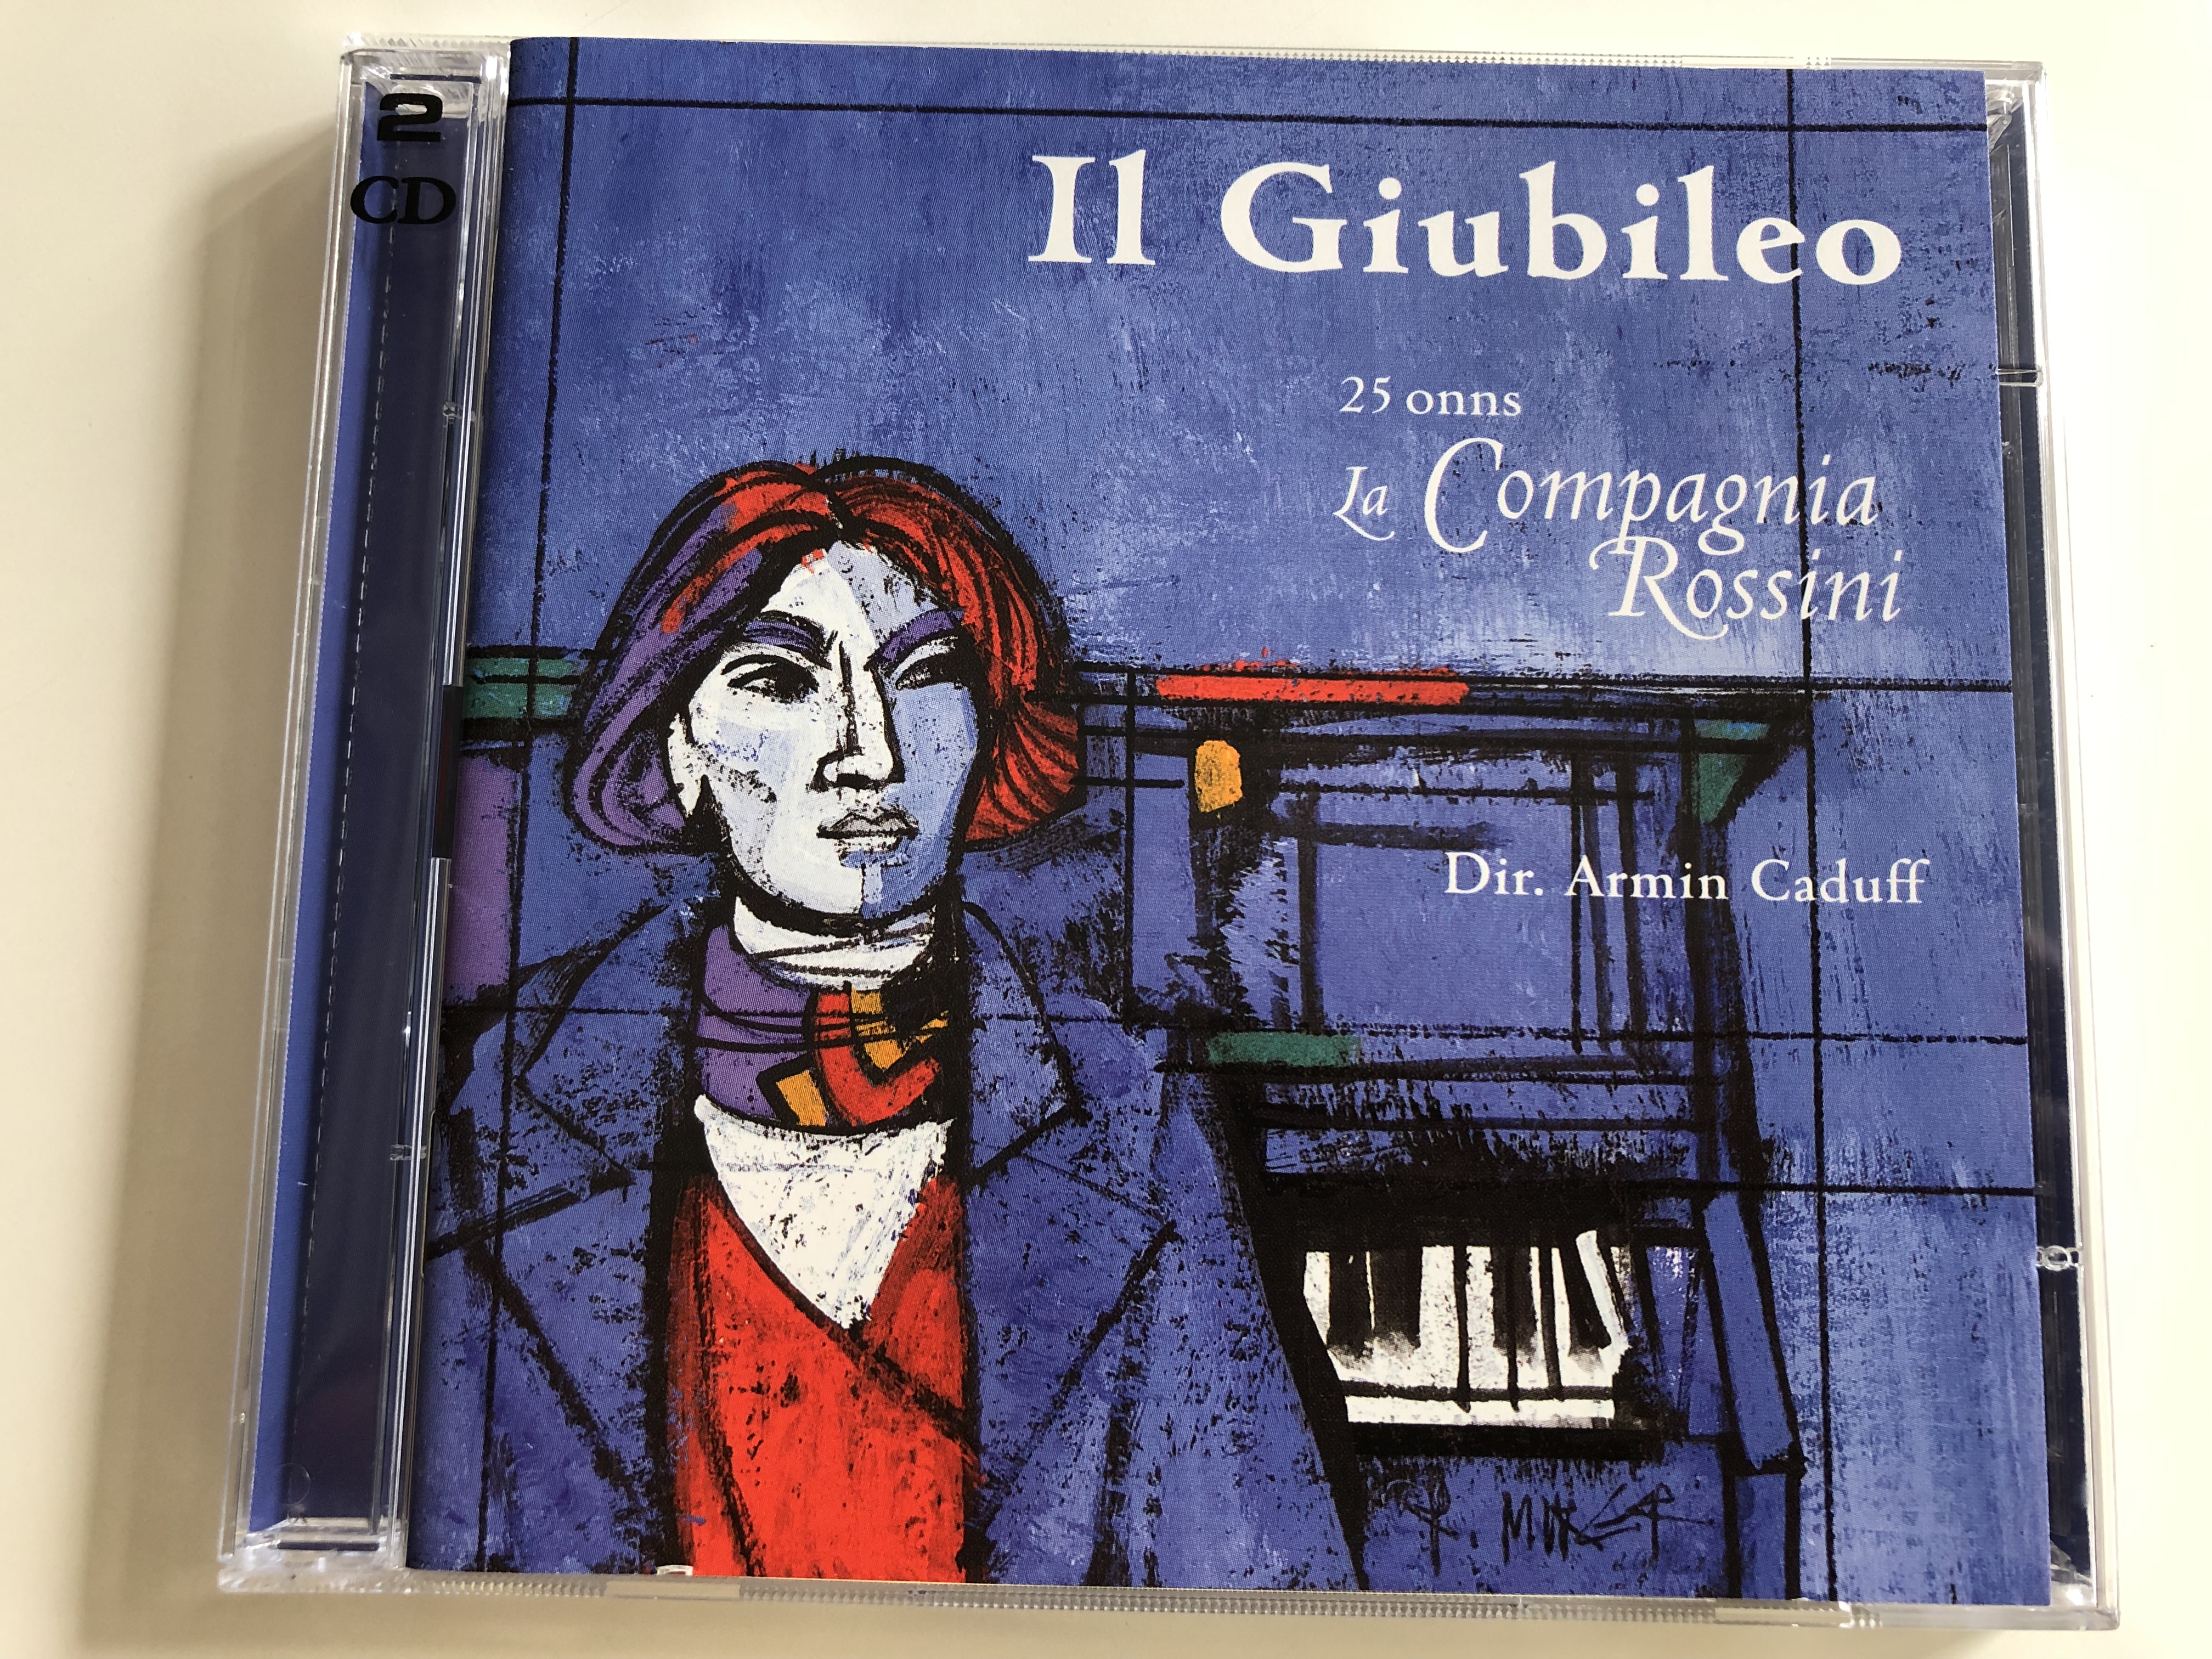 il-giubileo-25-onns-la-compagnia-rossini-dir.-armin-caduff-suisa-audio-2x-cd-1-.jpg